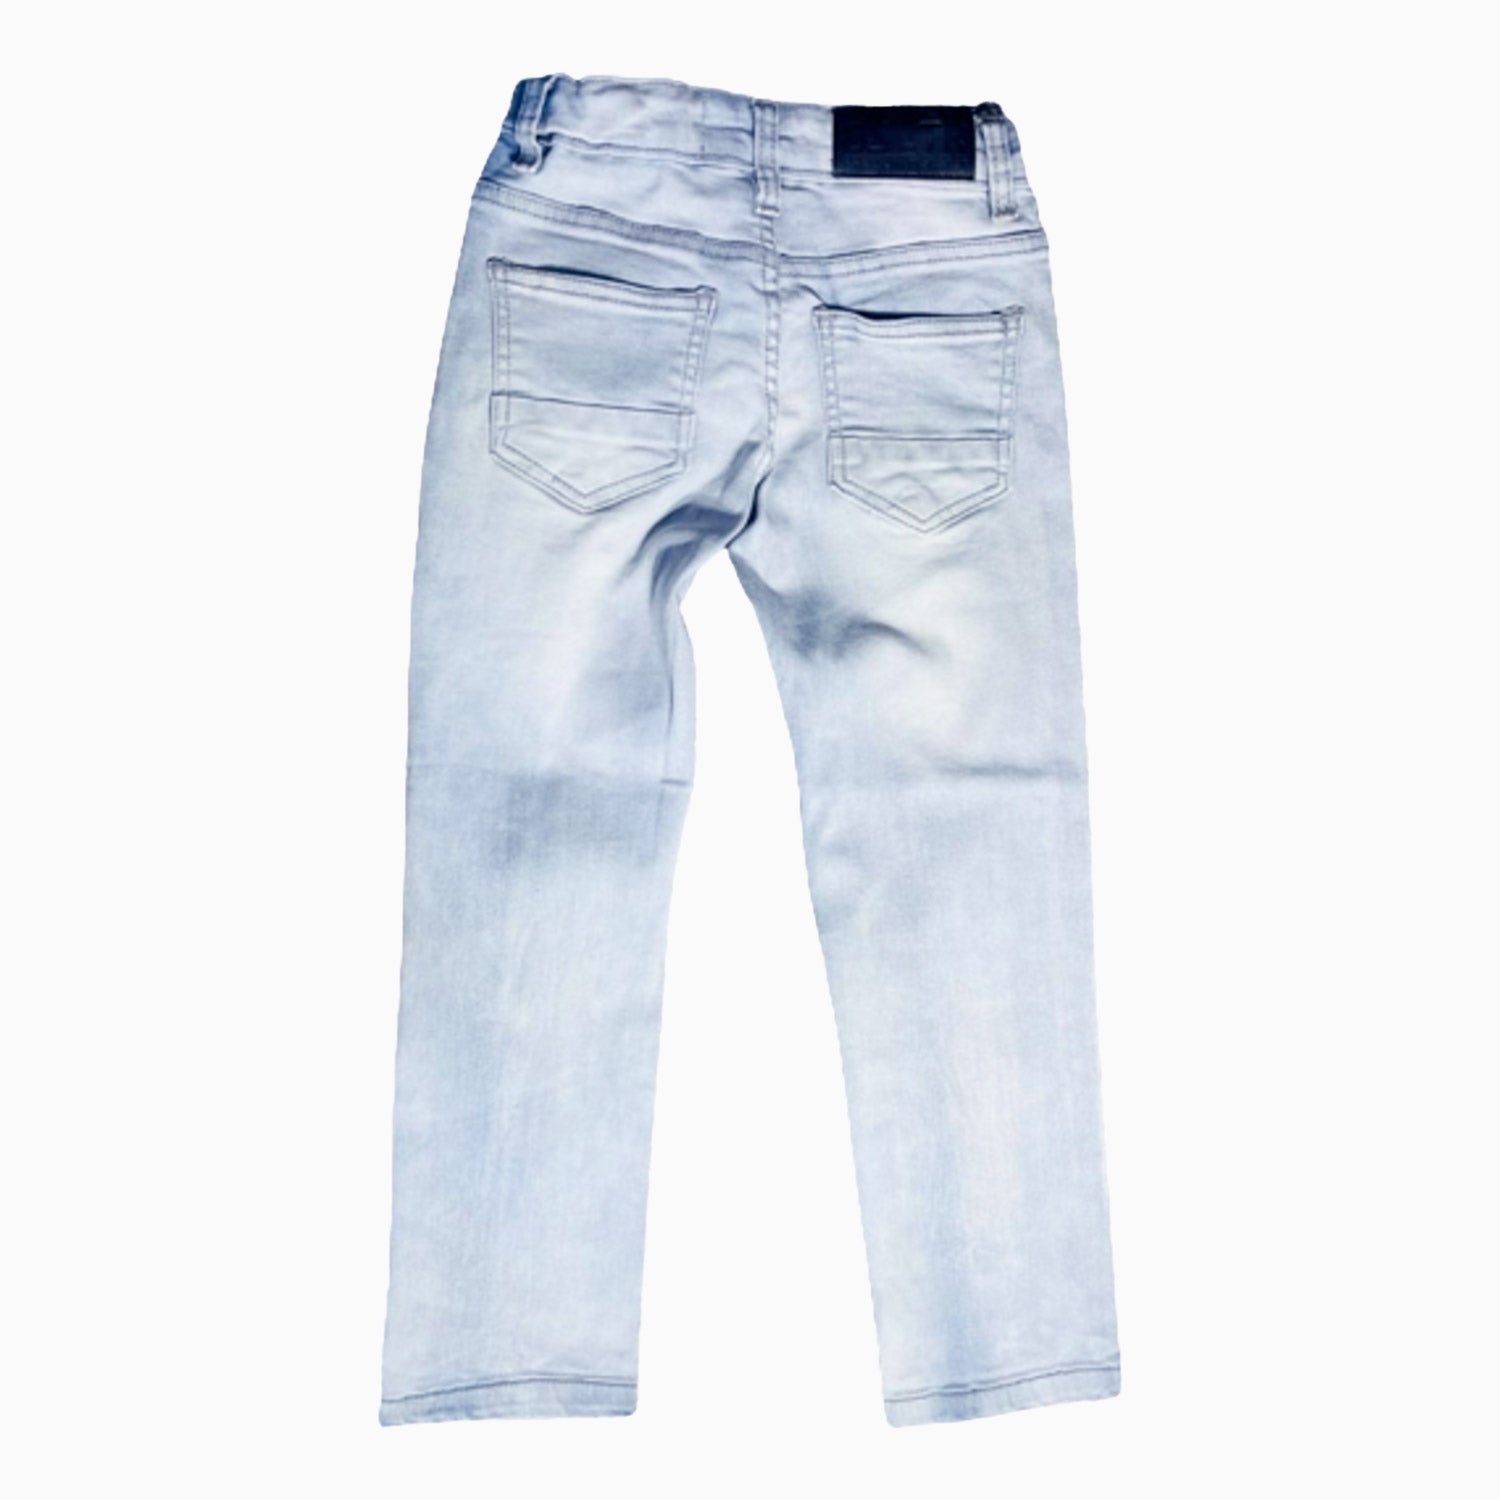 premium-disaster-kids-ice-blue-jeans-denim-skinny-pant-dztr-101b